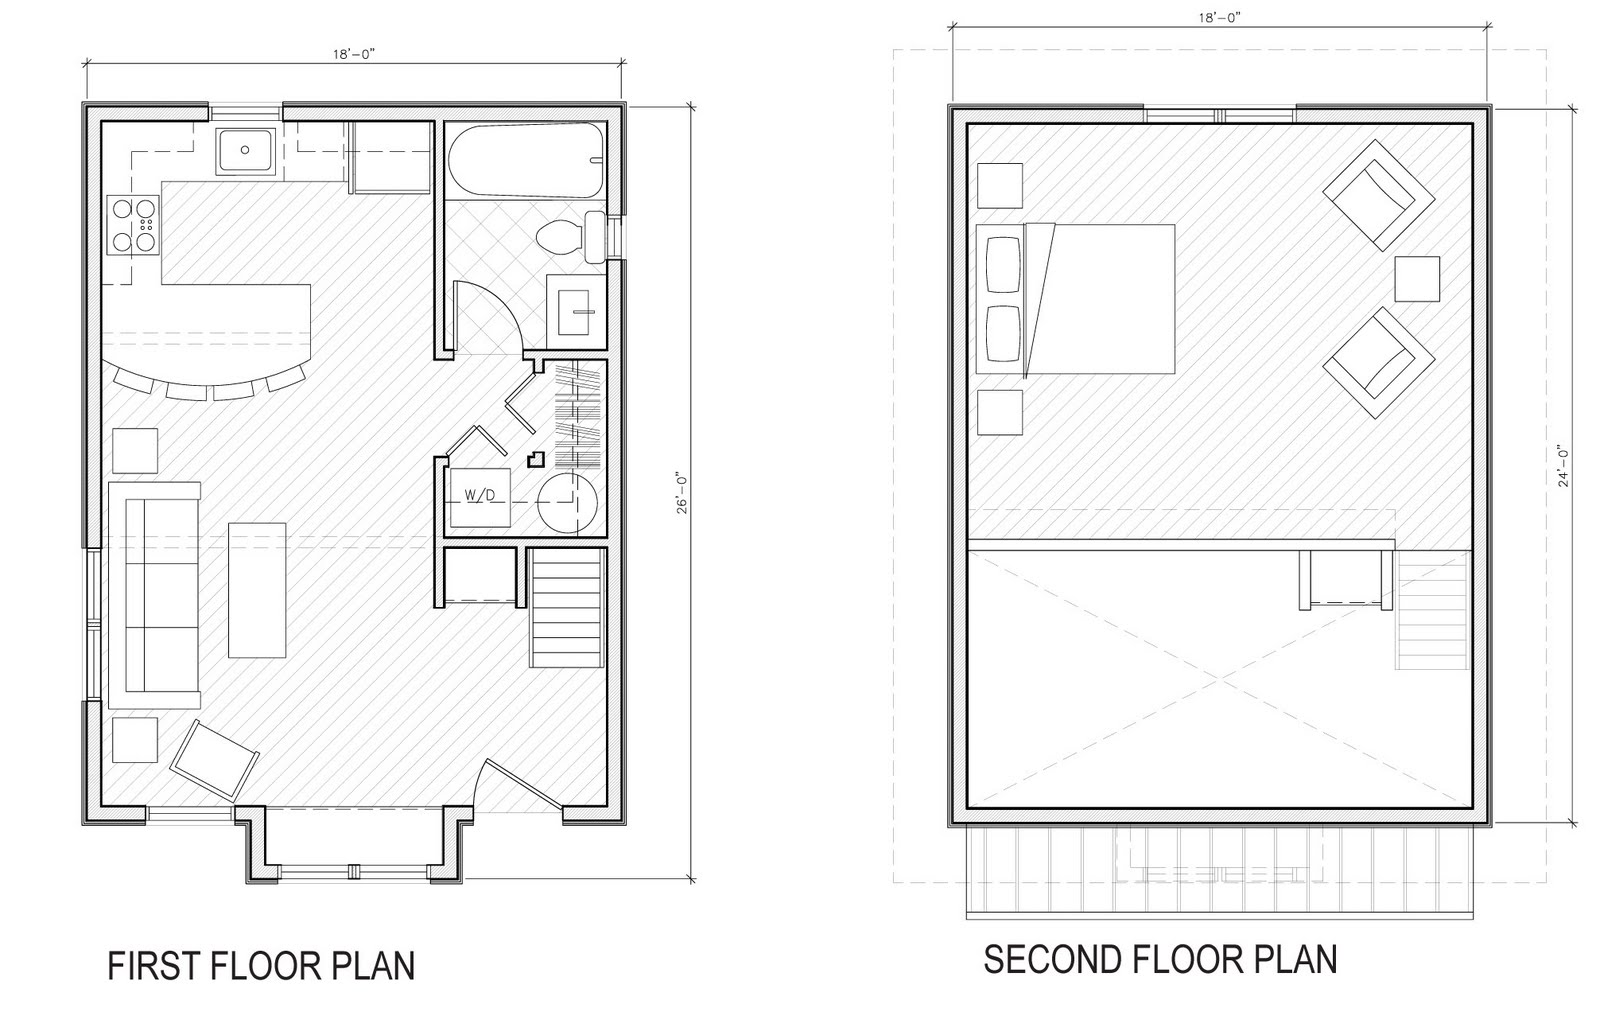 Fram Home Designs  1000 Square Feet on Design Banter  More D A Home Plans  3 Plans Under 1 000 Square Feet